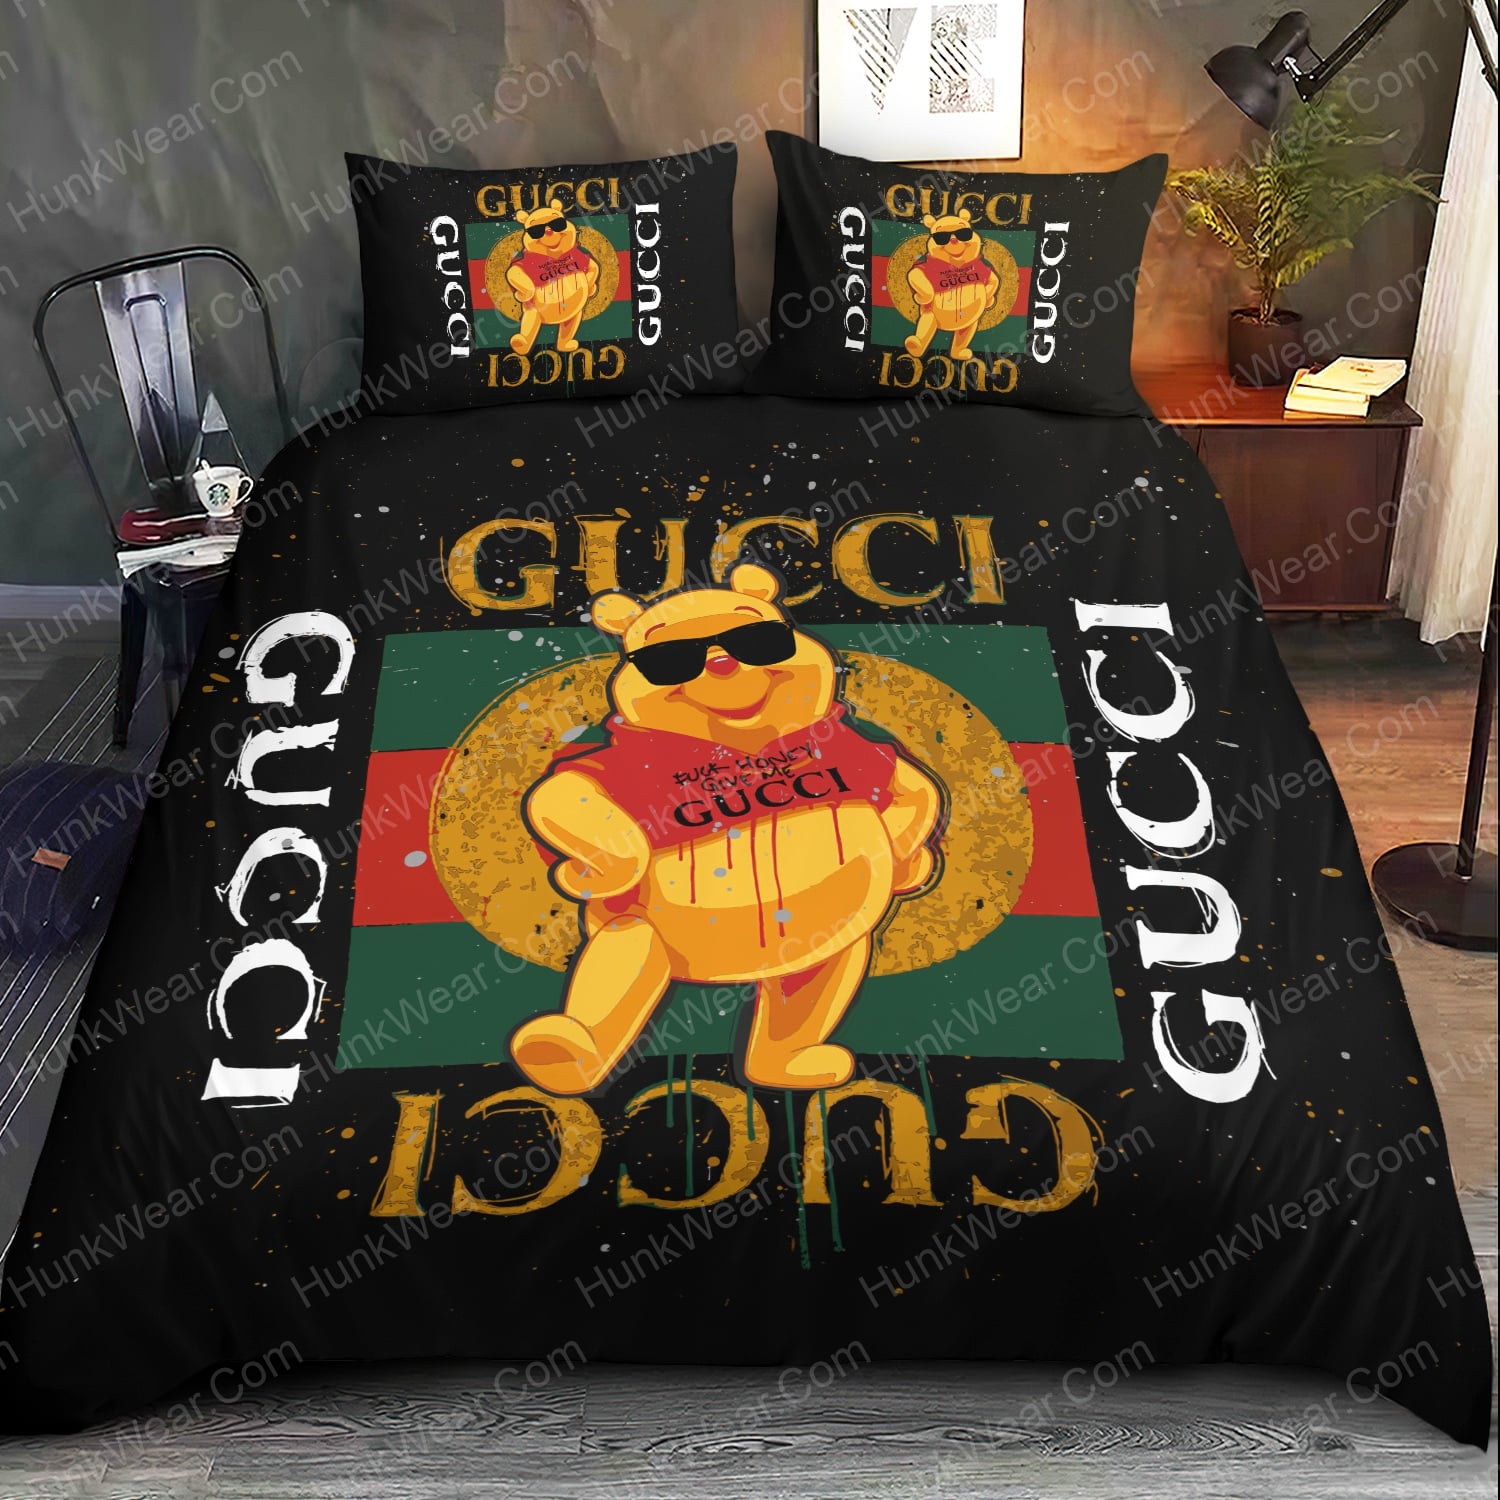 gucci winnie the pooh bed set bedding set